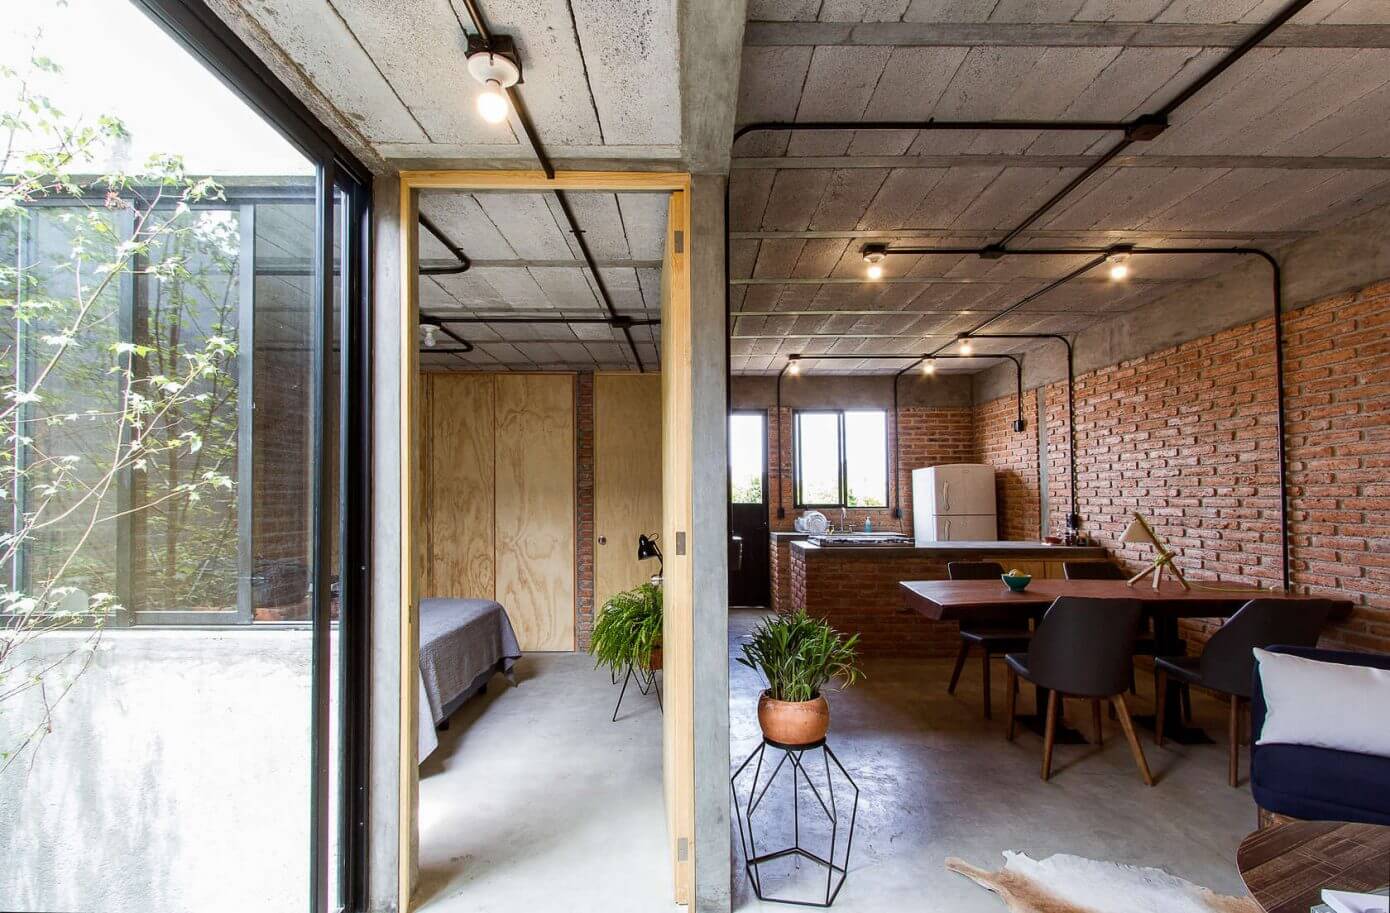 Casa Estudio by Intersticial Arquitectura